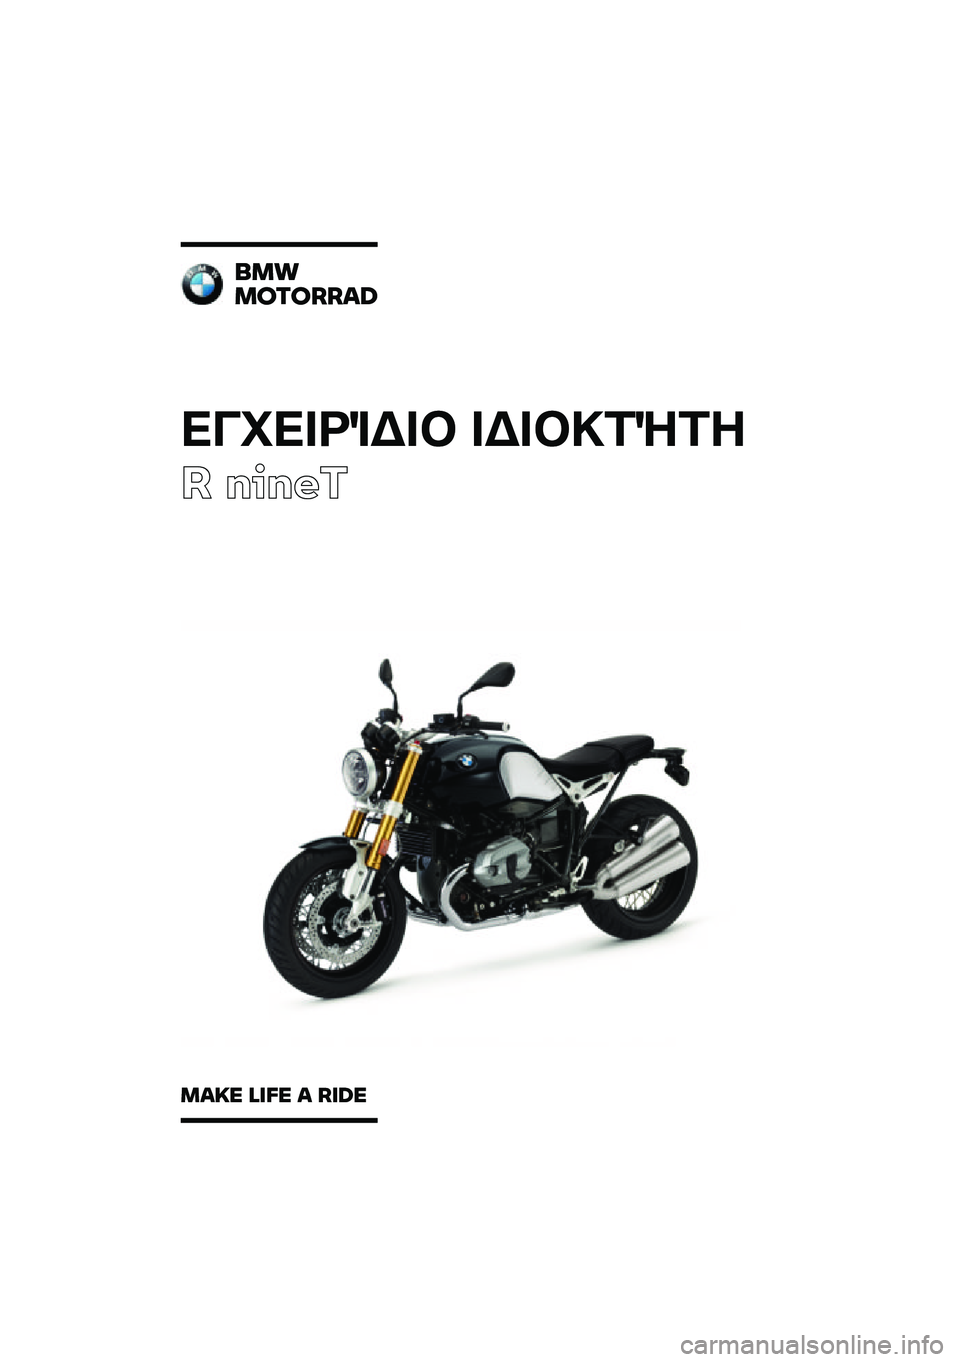 BMW MOTORRAD R NINE T 2020  Εγχειρίδιο ιδιοκτήτη (in Greek) ��������\b��	 ��\b��	�
��\f��
� �����
���
�������\b�	
��\b�
� �\f�
�� �\b ��
�	� 